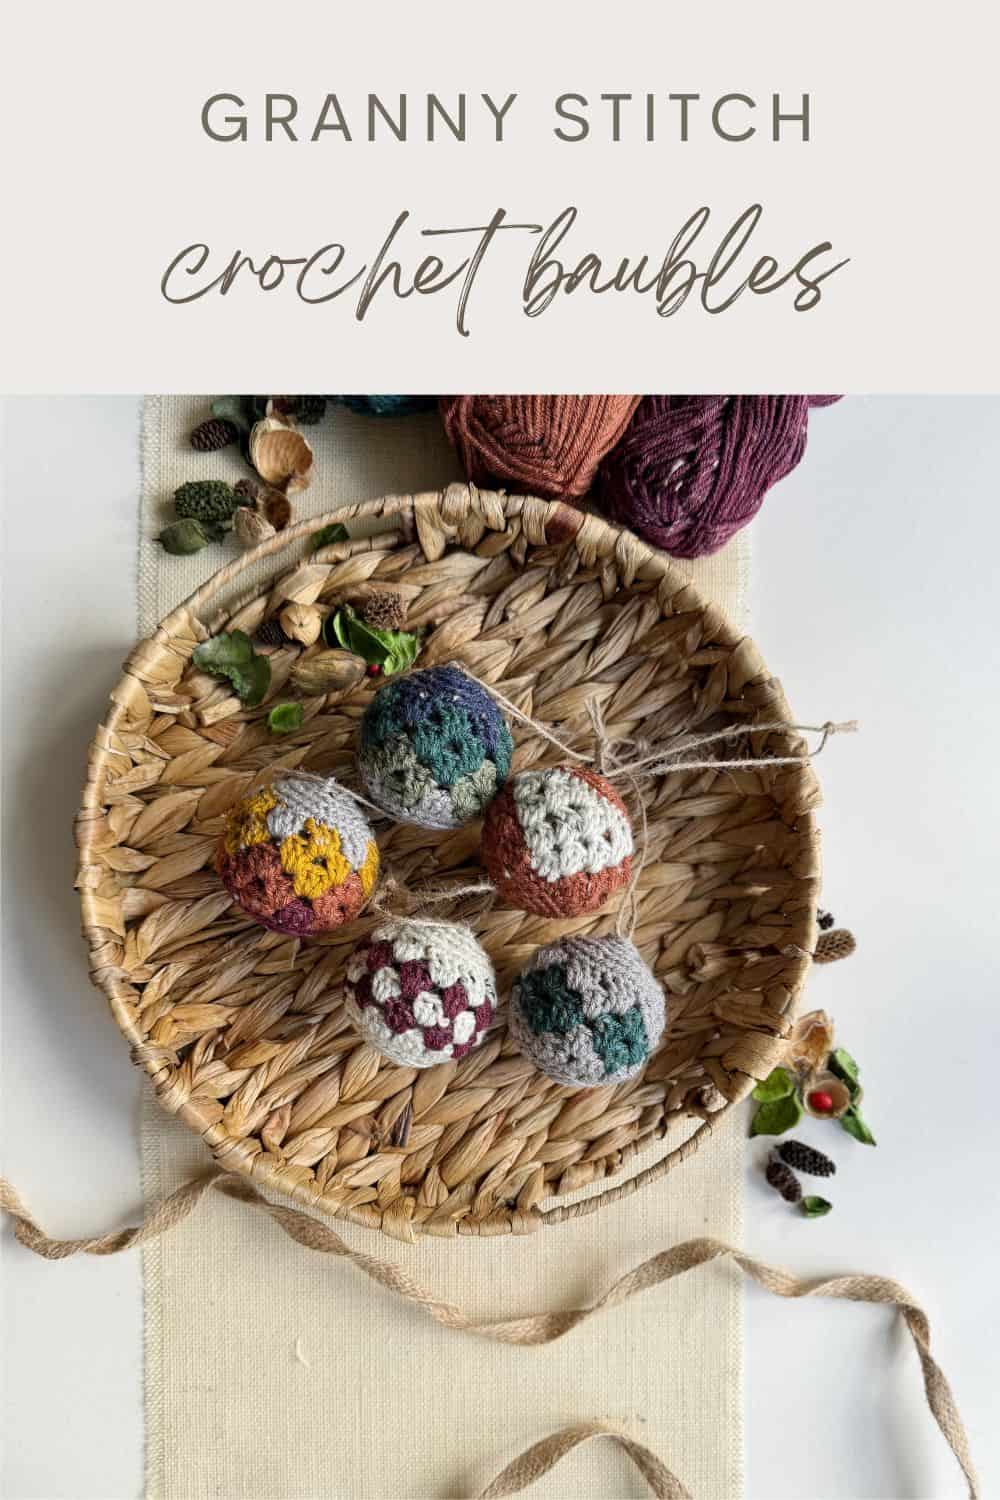 Granny stitch crochet tumbles.